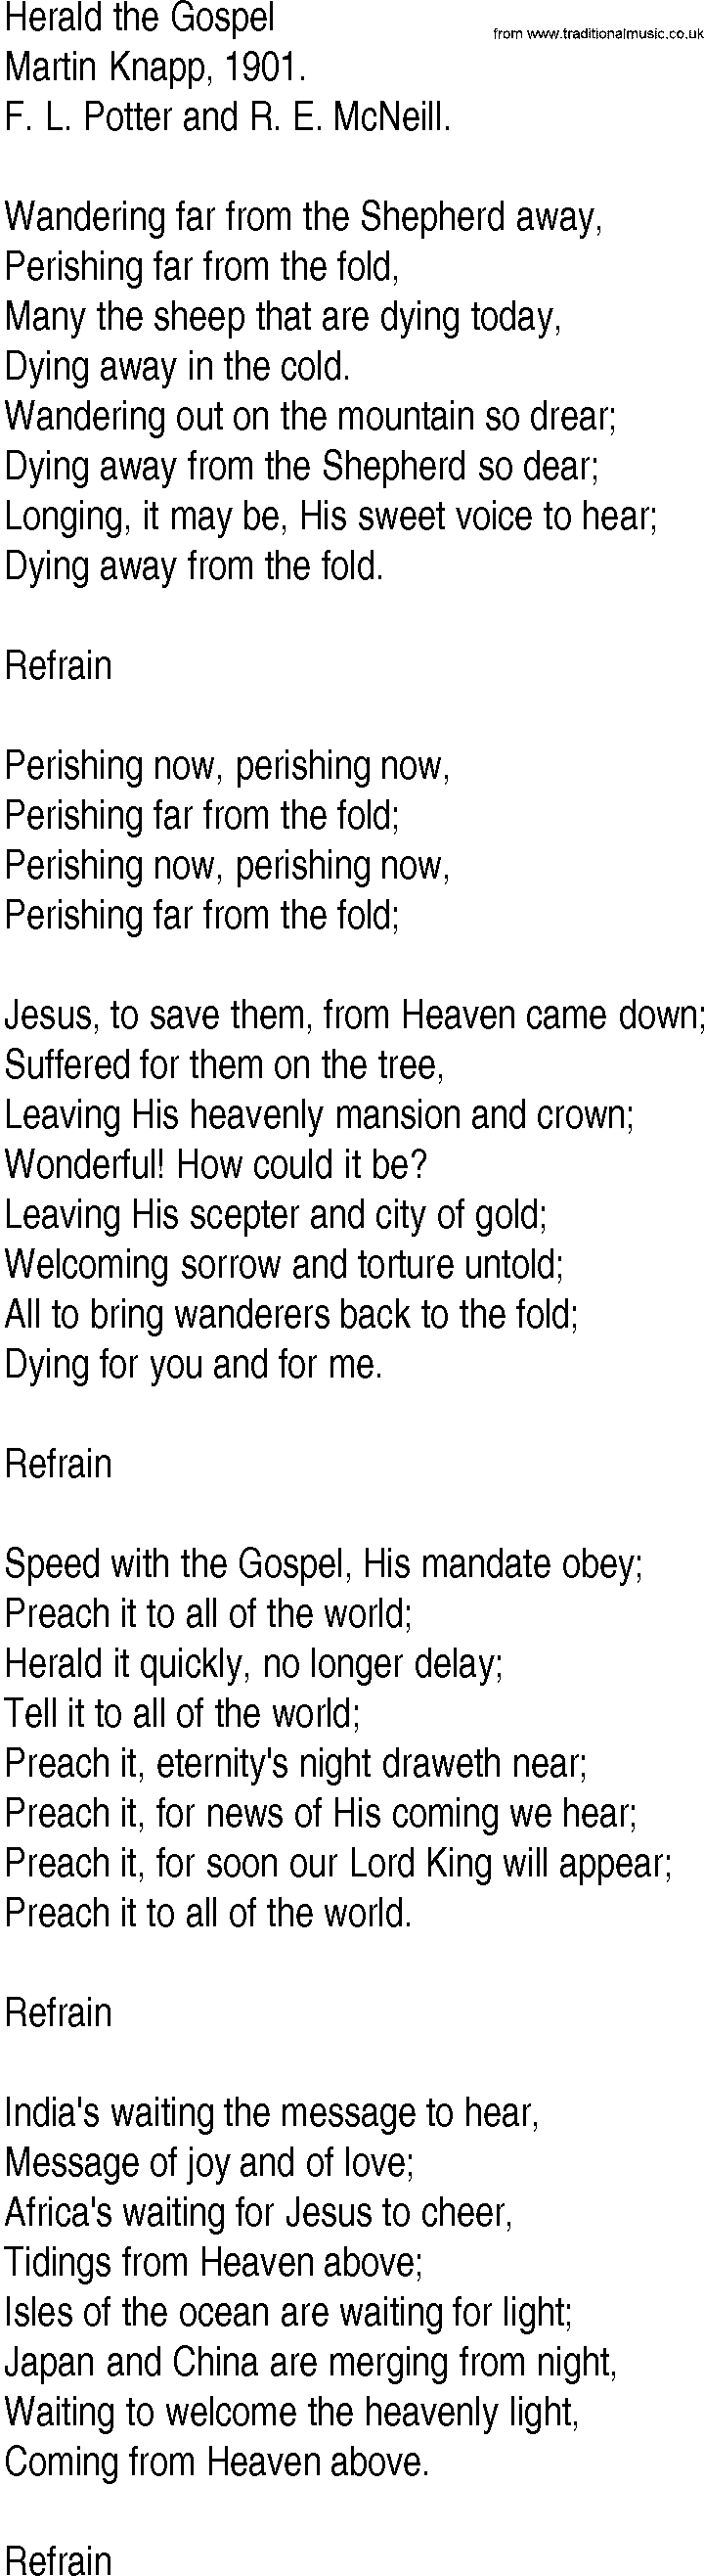 Hymn and Gospel Song: Herald the Gospel by Martin Knapp lyrics